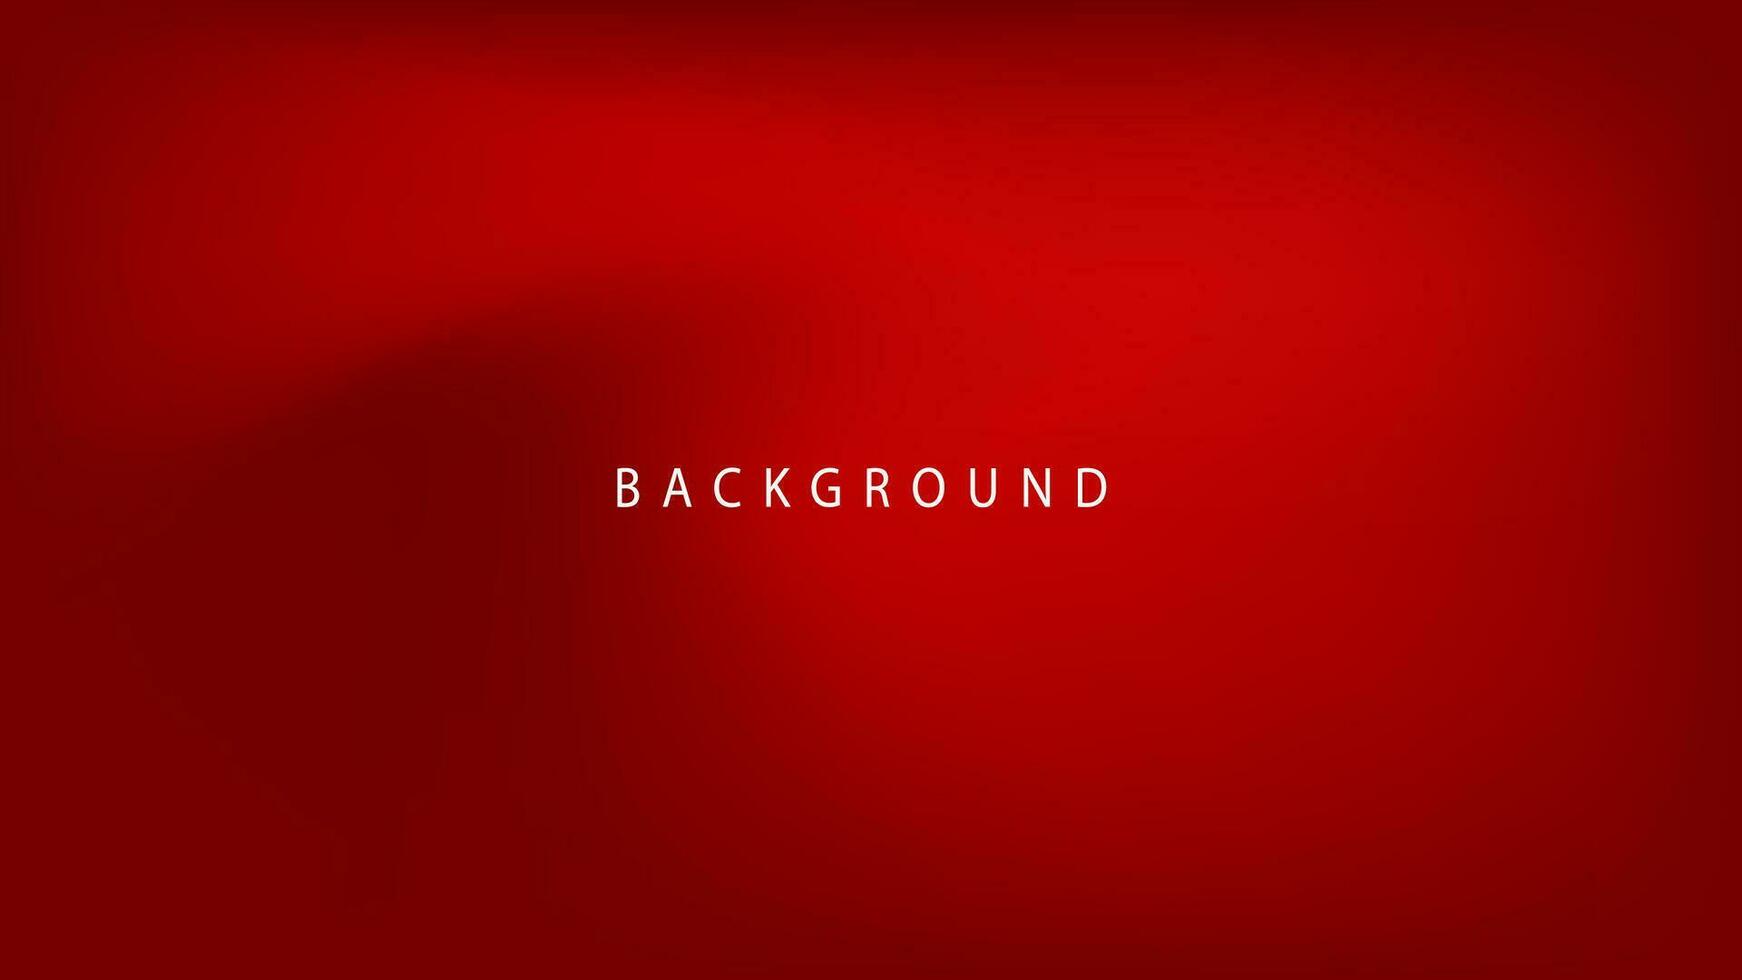 Soft Red gradient landscape background, blurred background suitable for banners. vector illustration